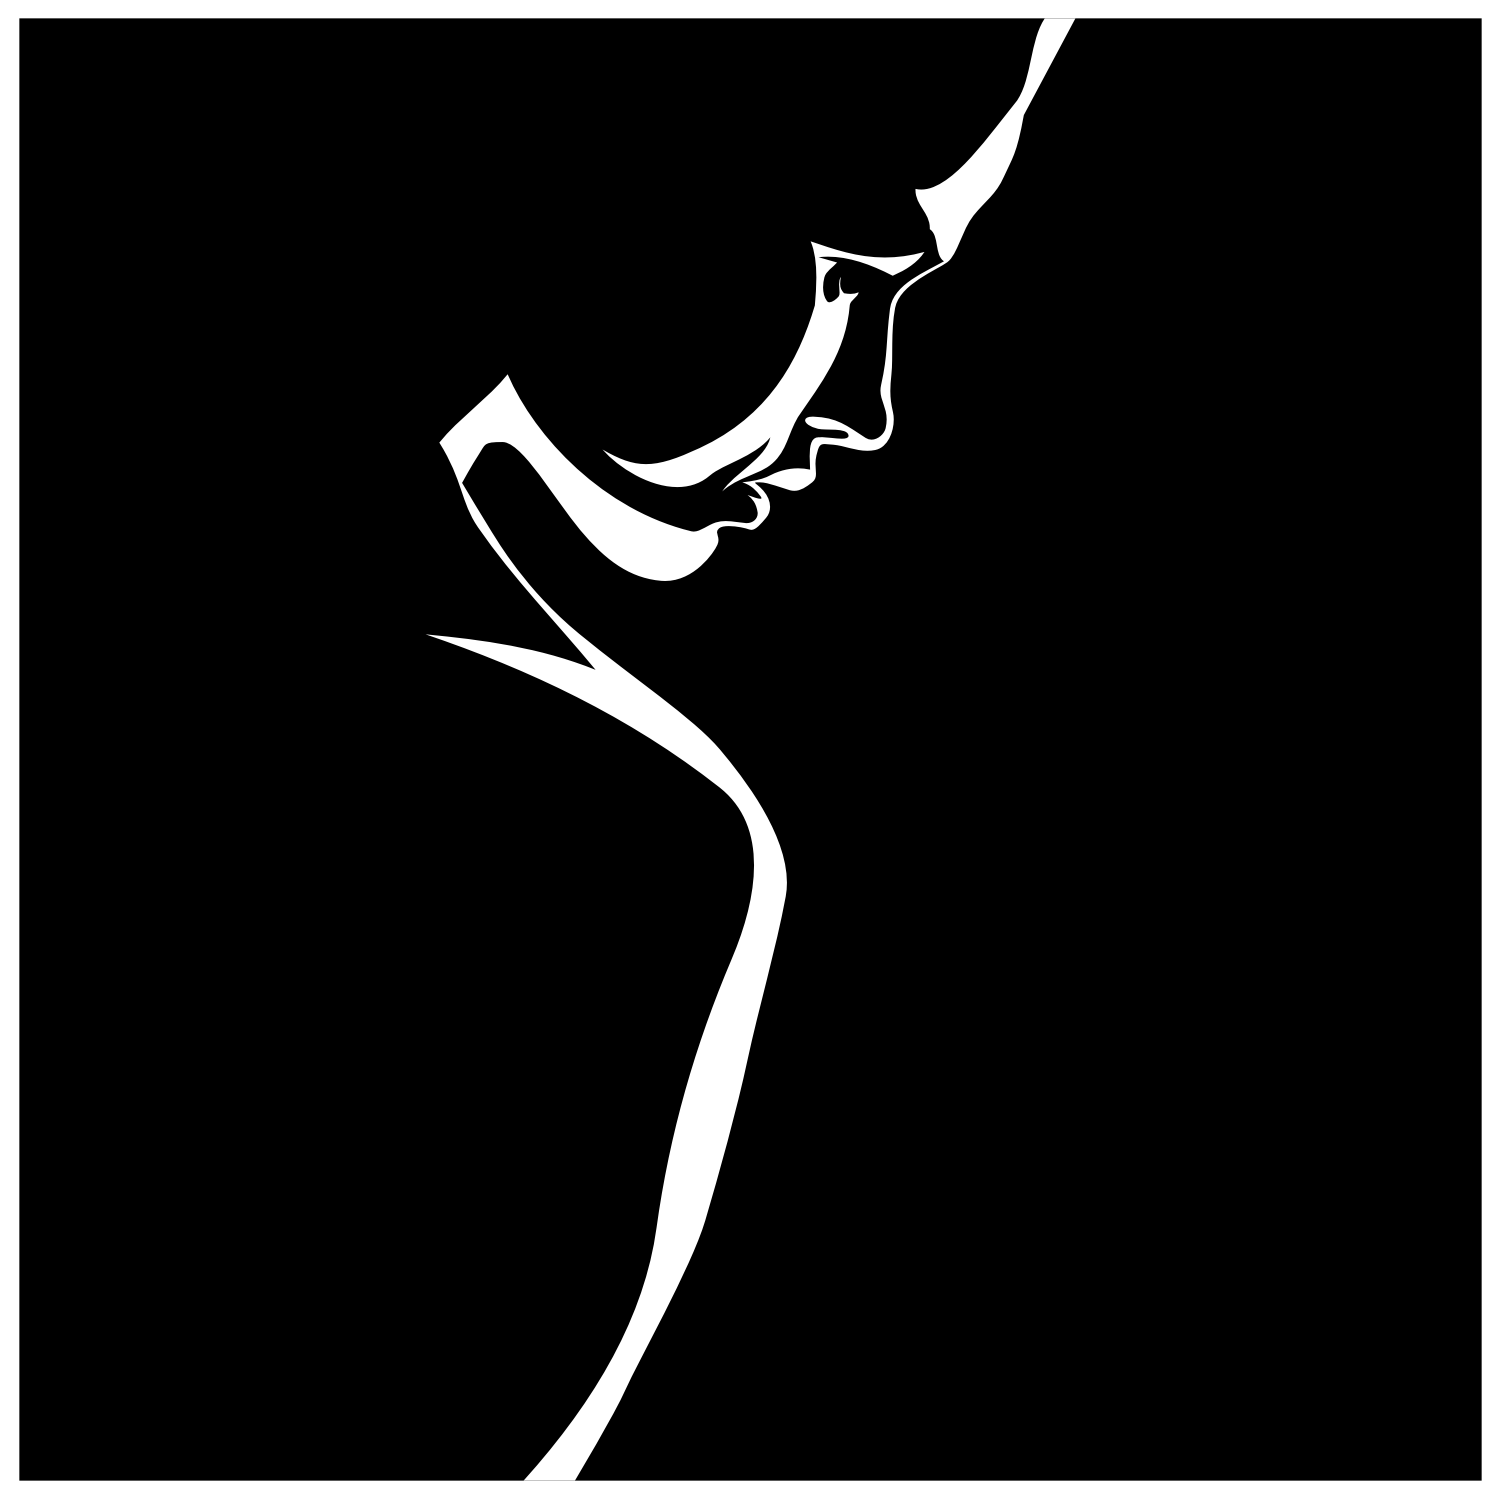 Woman silhouette on black